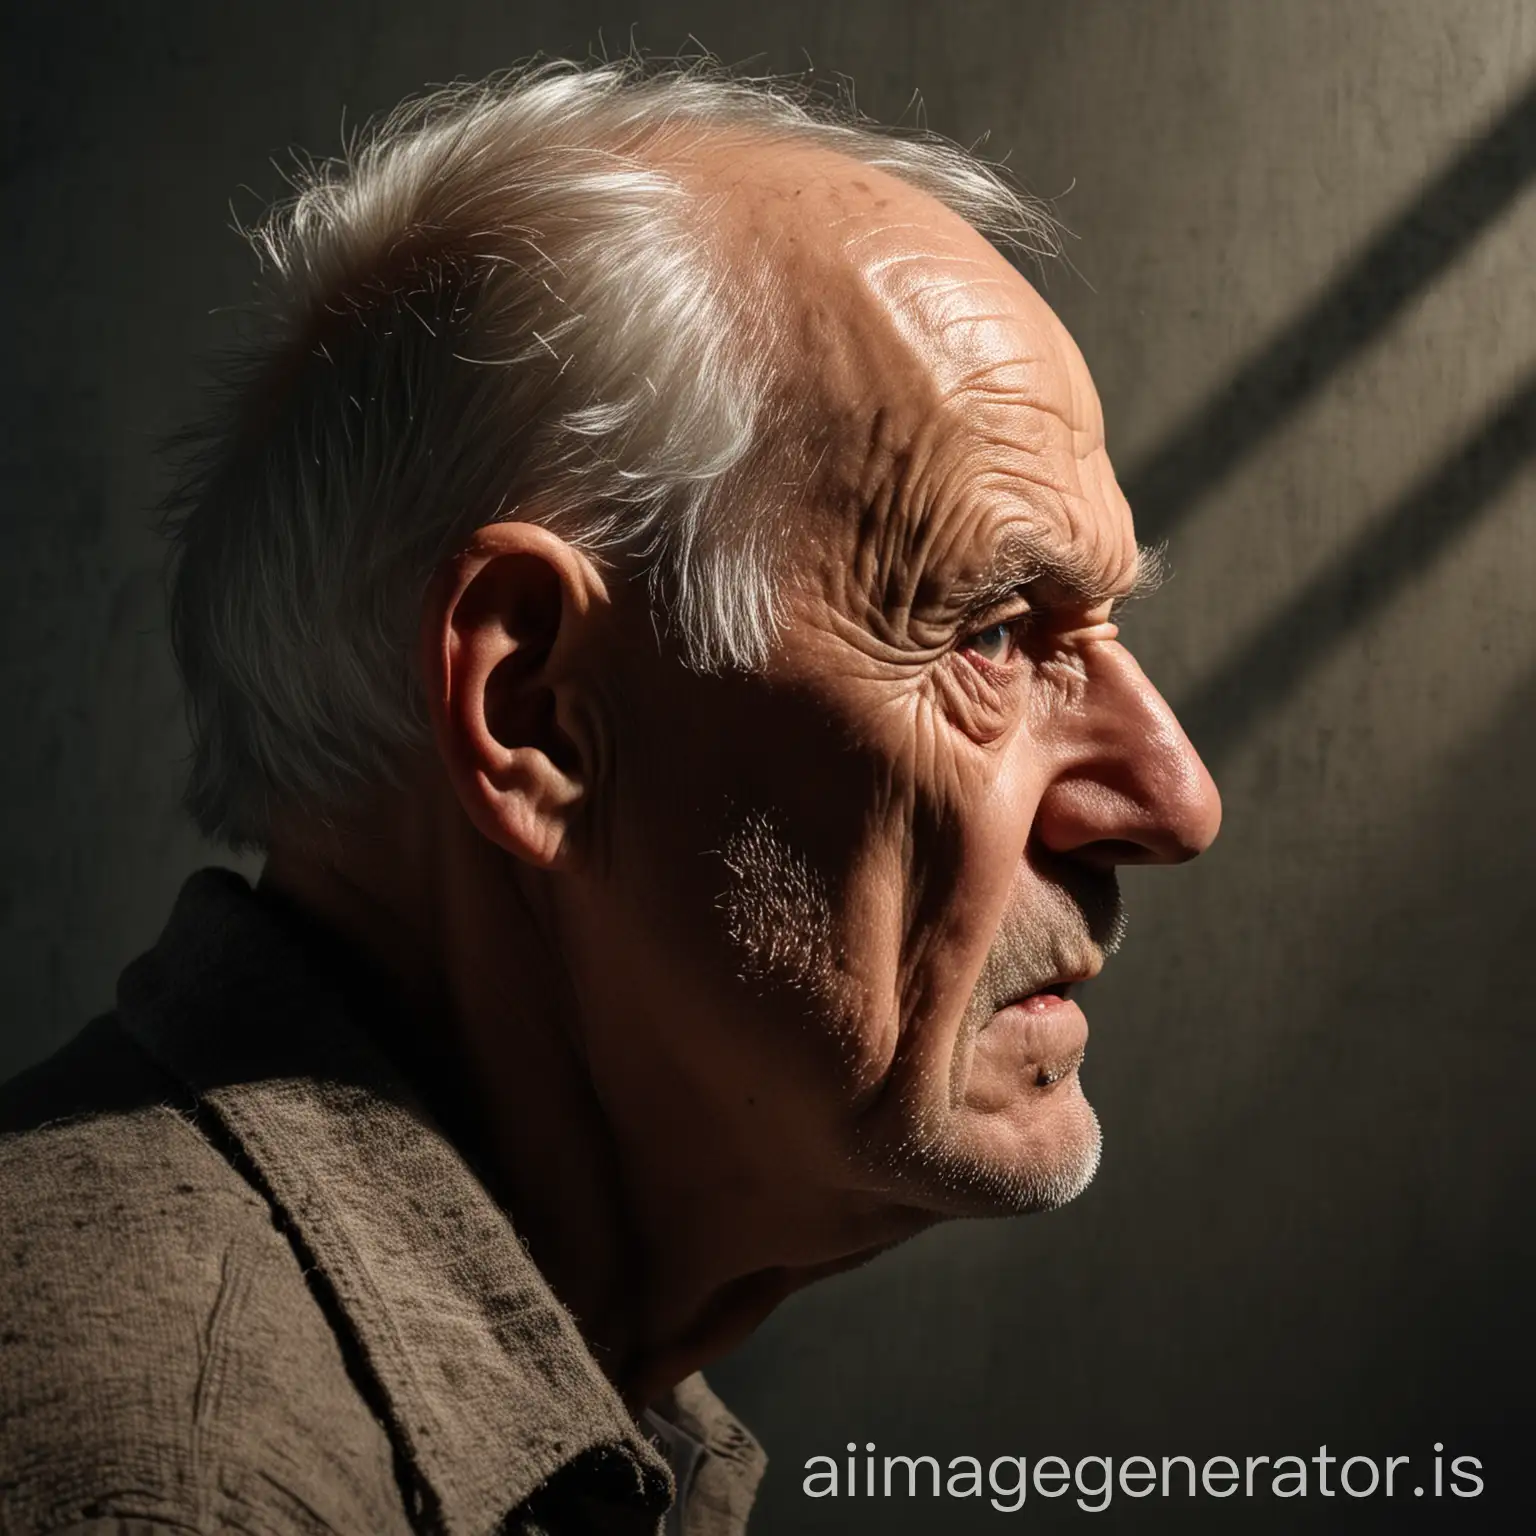 Intense-Profile-Portrait-of-an-Elderly-Gentleman-with-Dramatic-Lighting